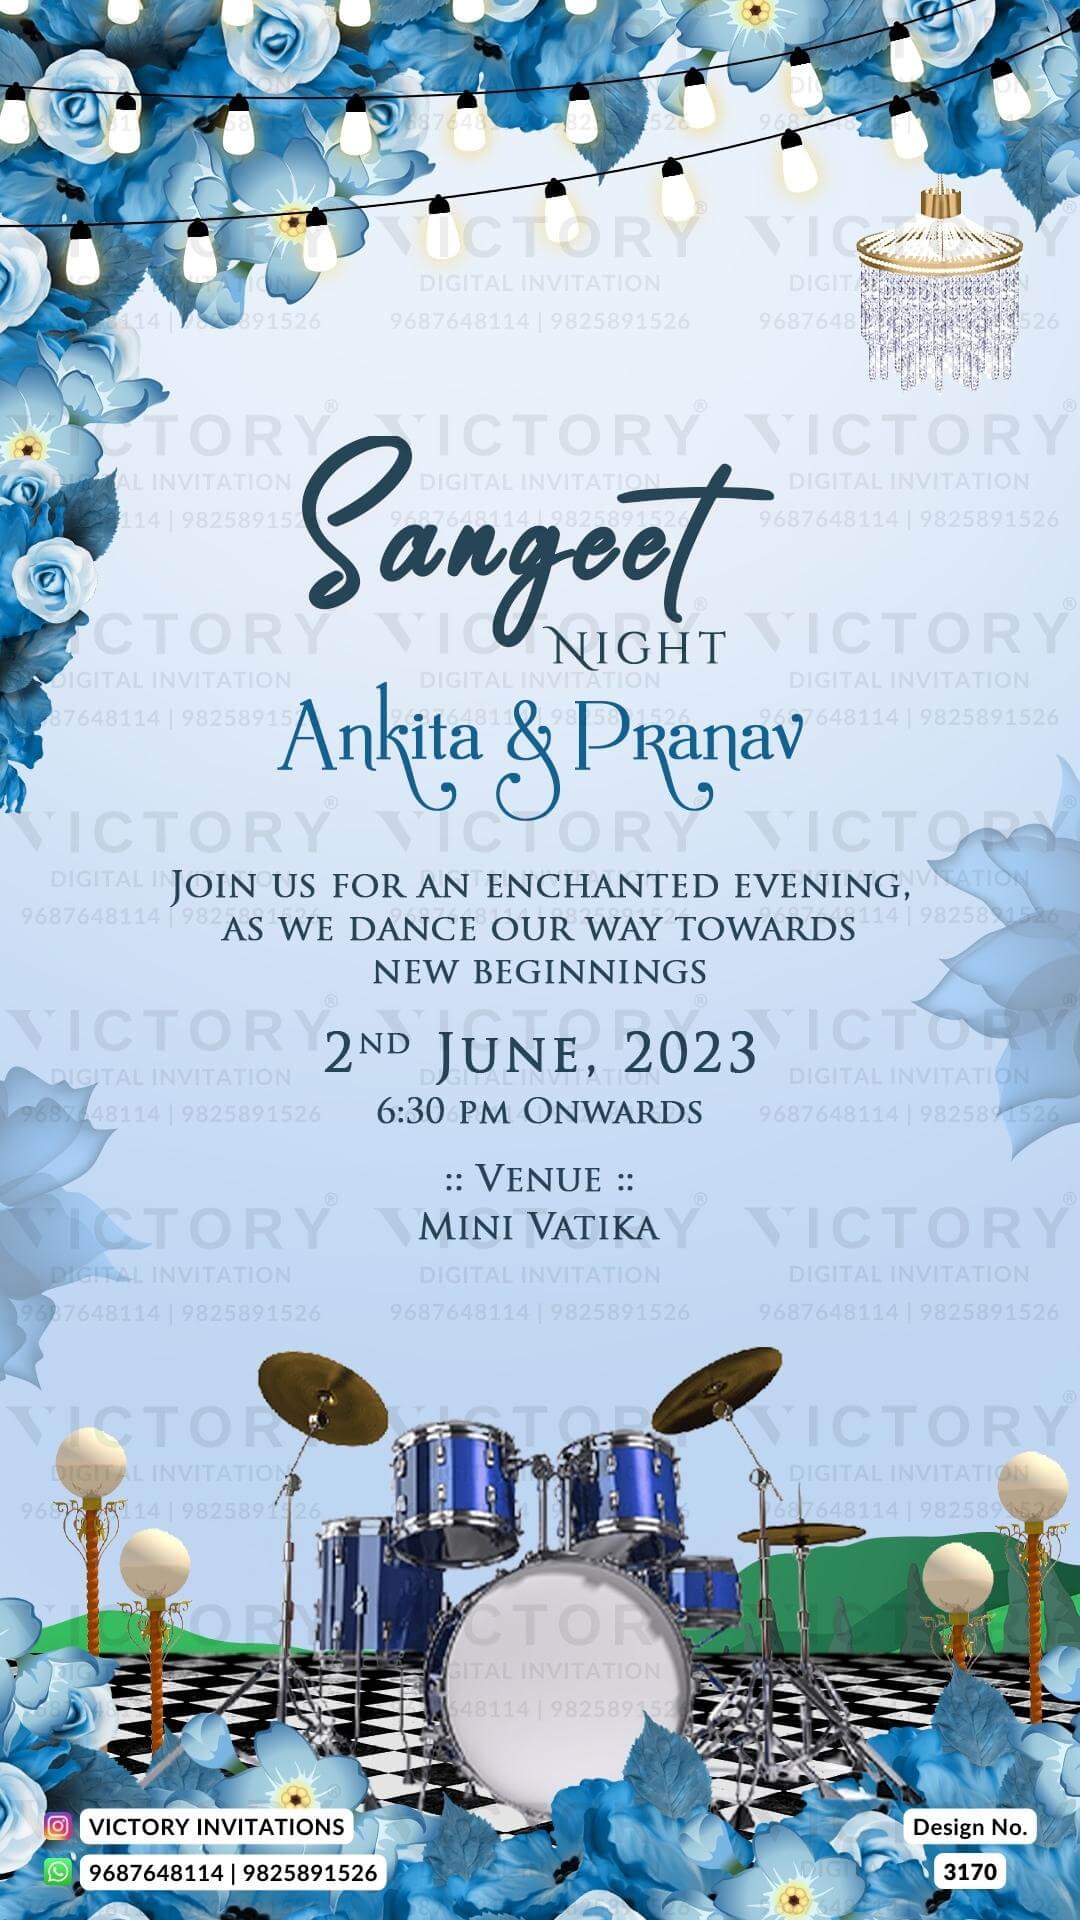 Sangeet Ceremony digital invitation card design no.3170